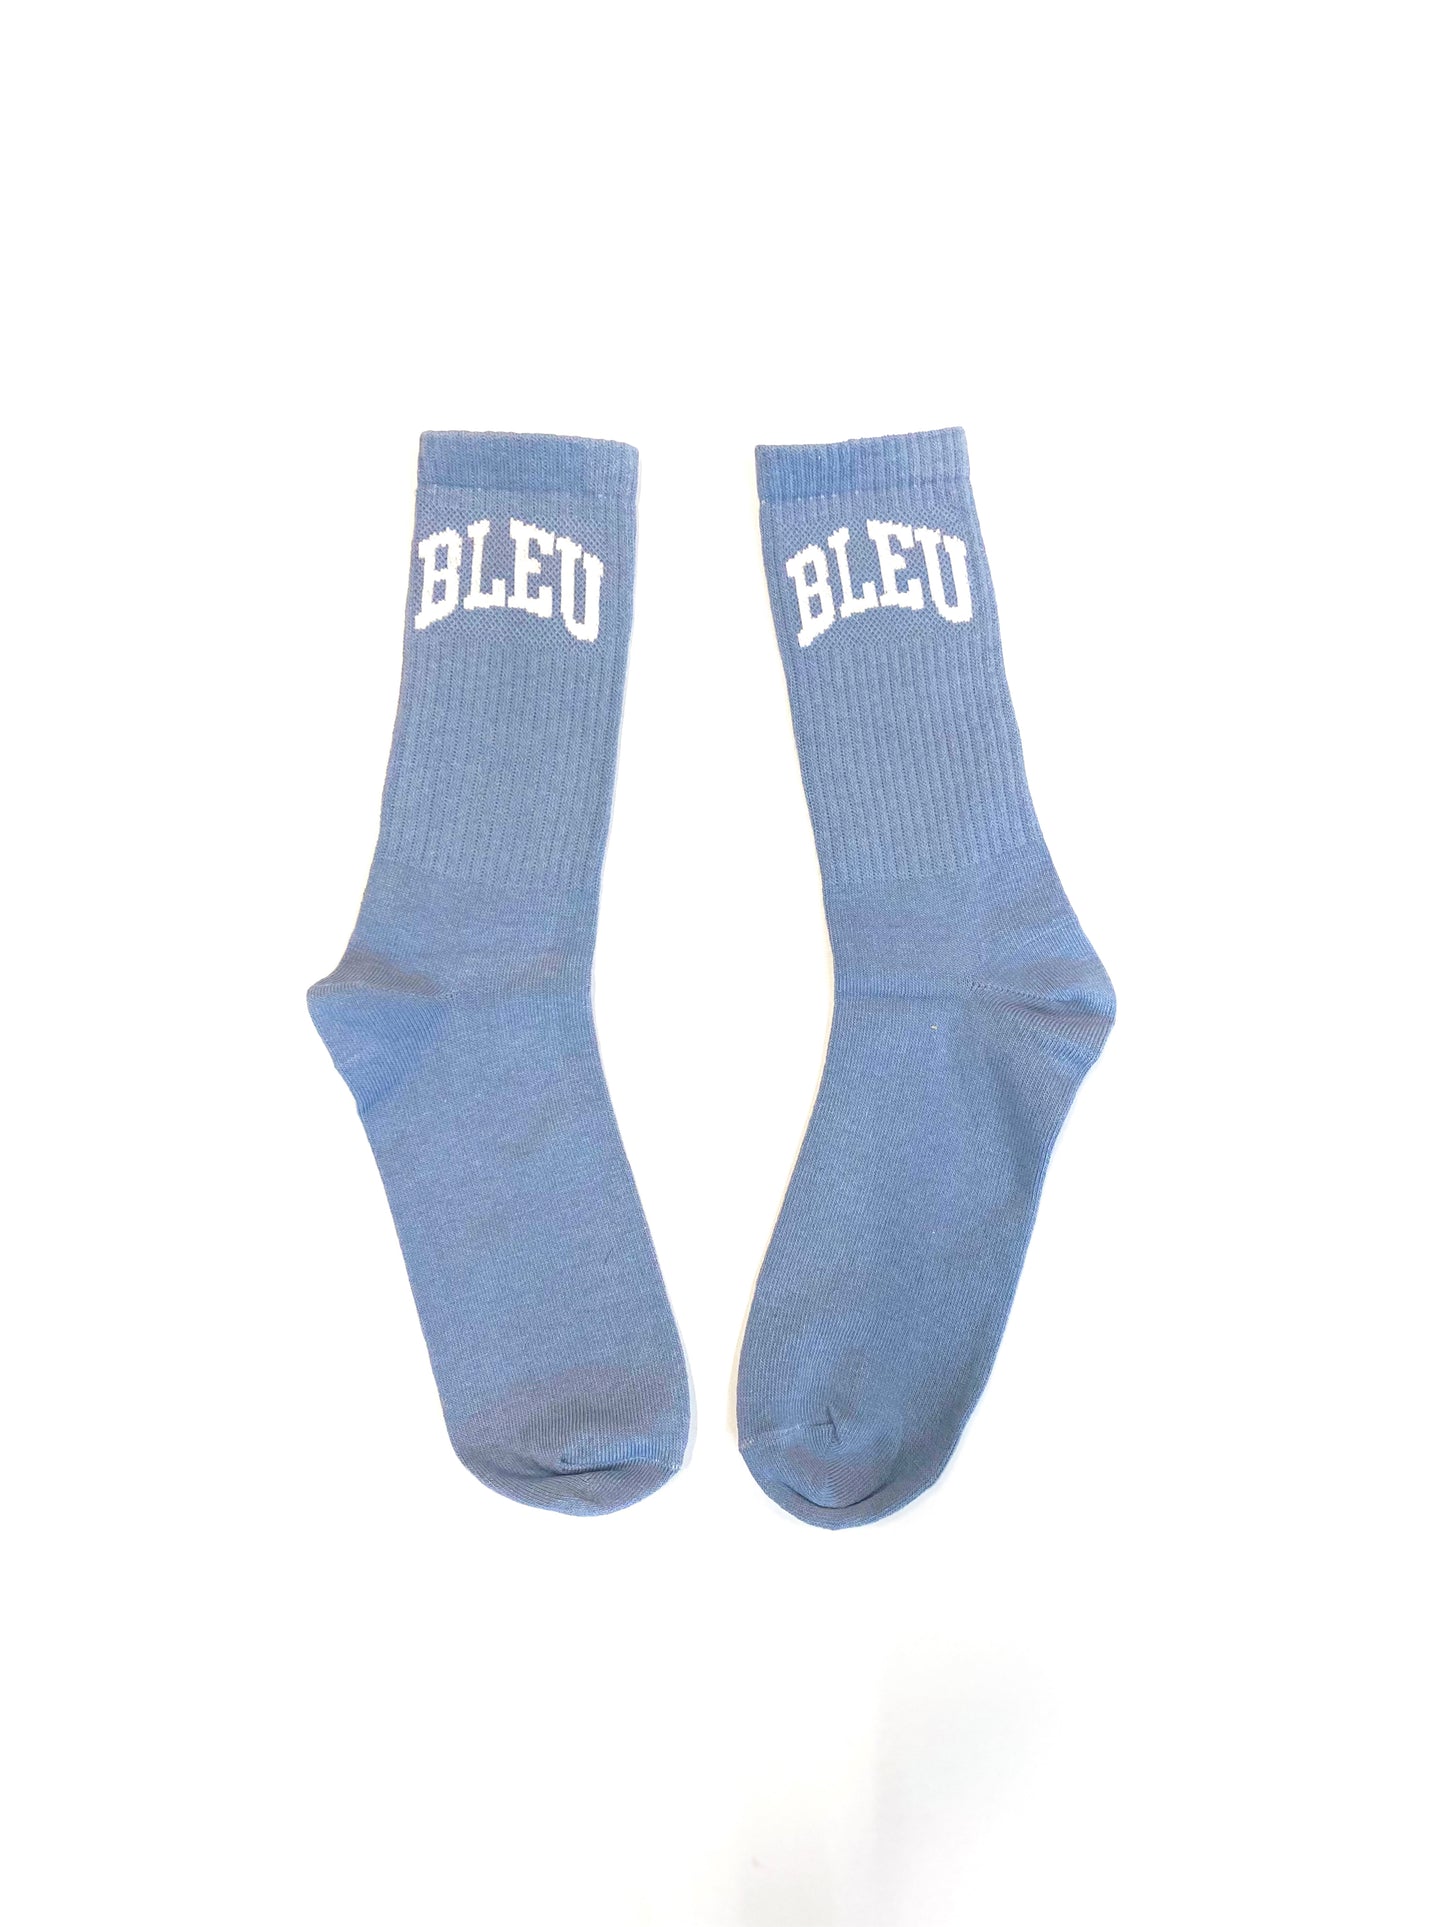 Slate BLEU Socks